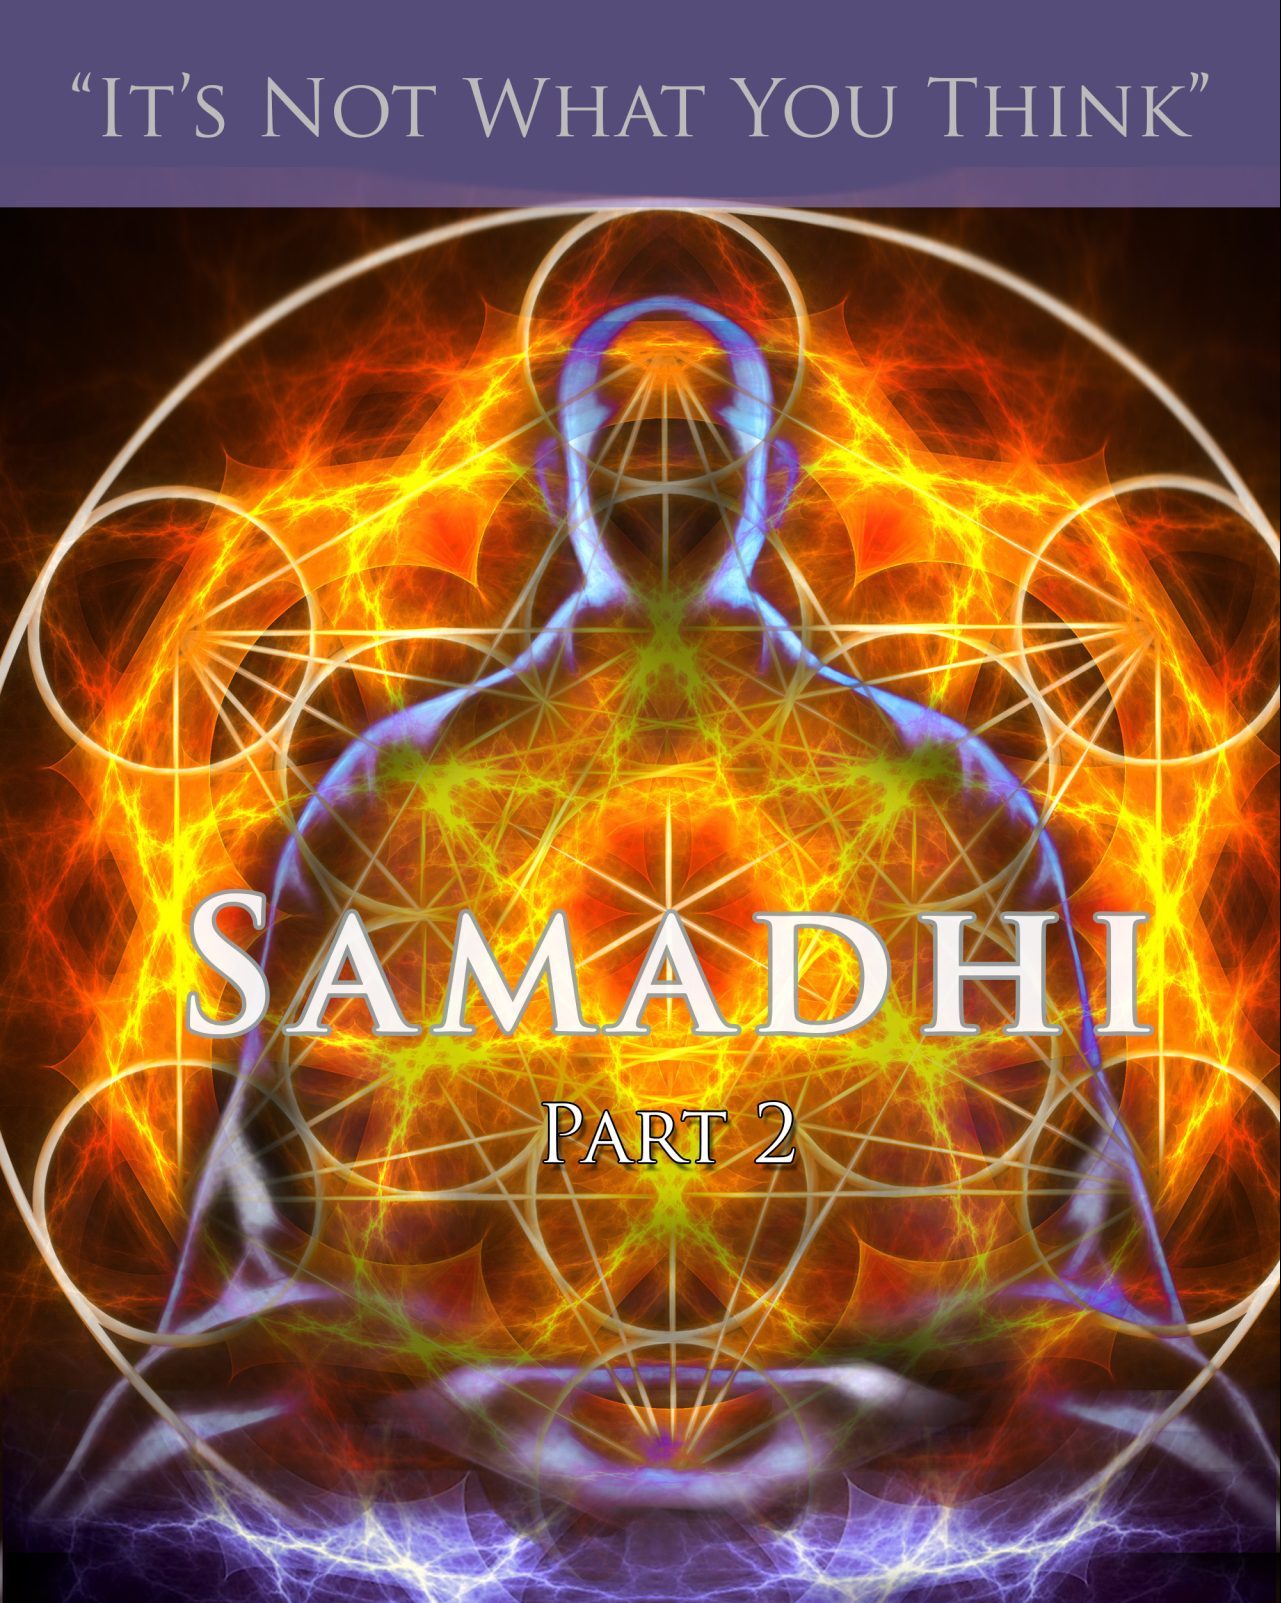 Samadhi Movie, Part 2: "It's Not What You Think" | Hempfield Apothetique | Lancaster, PA